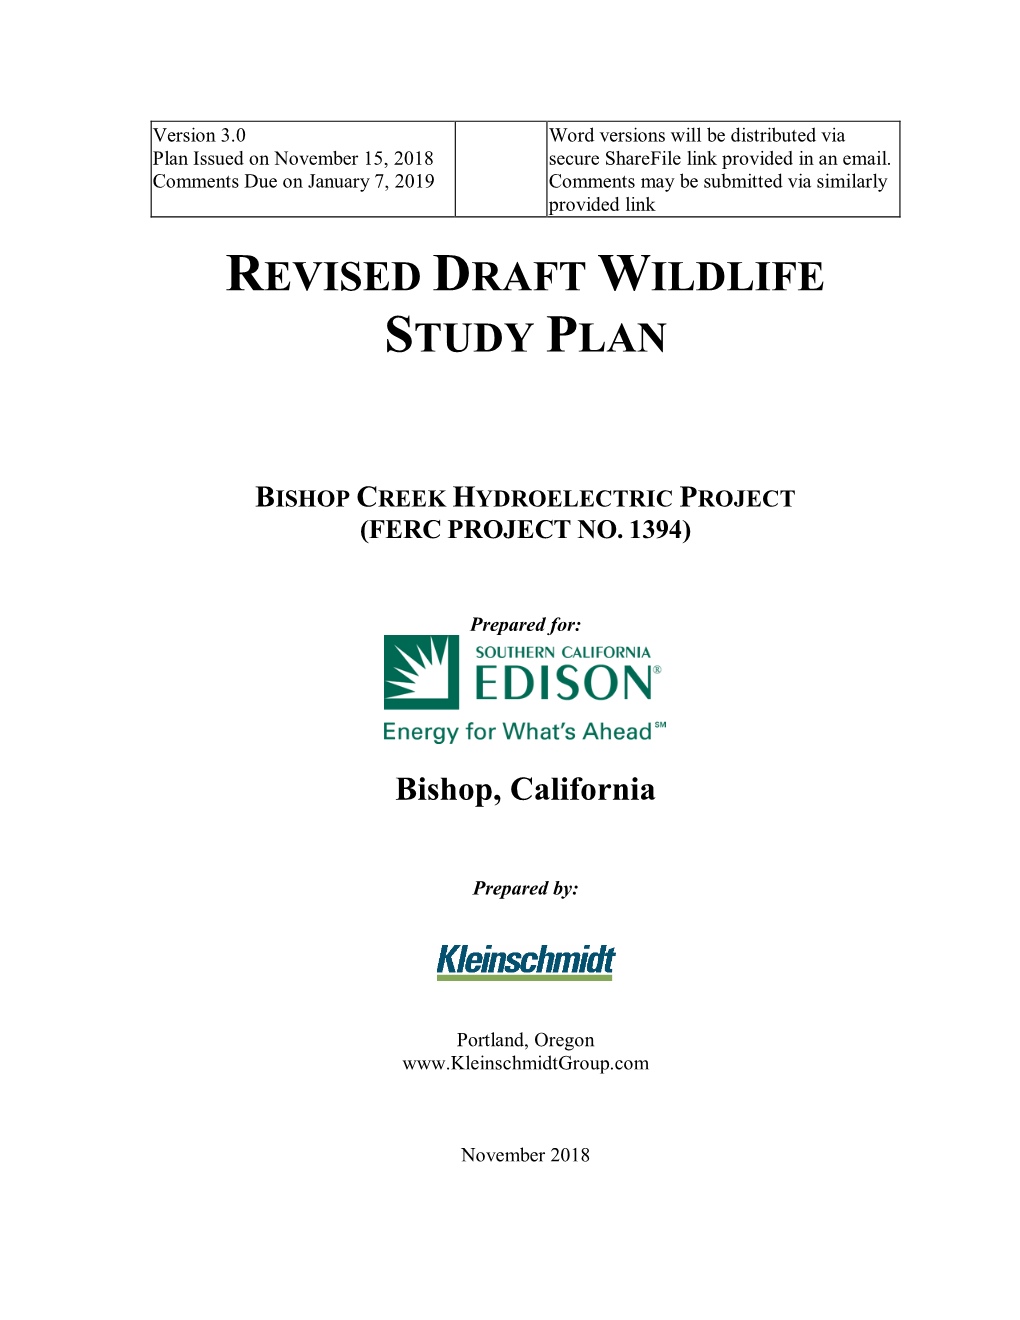 Revised Draft Wildlife Study Plan